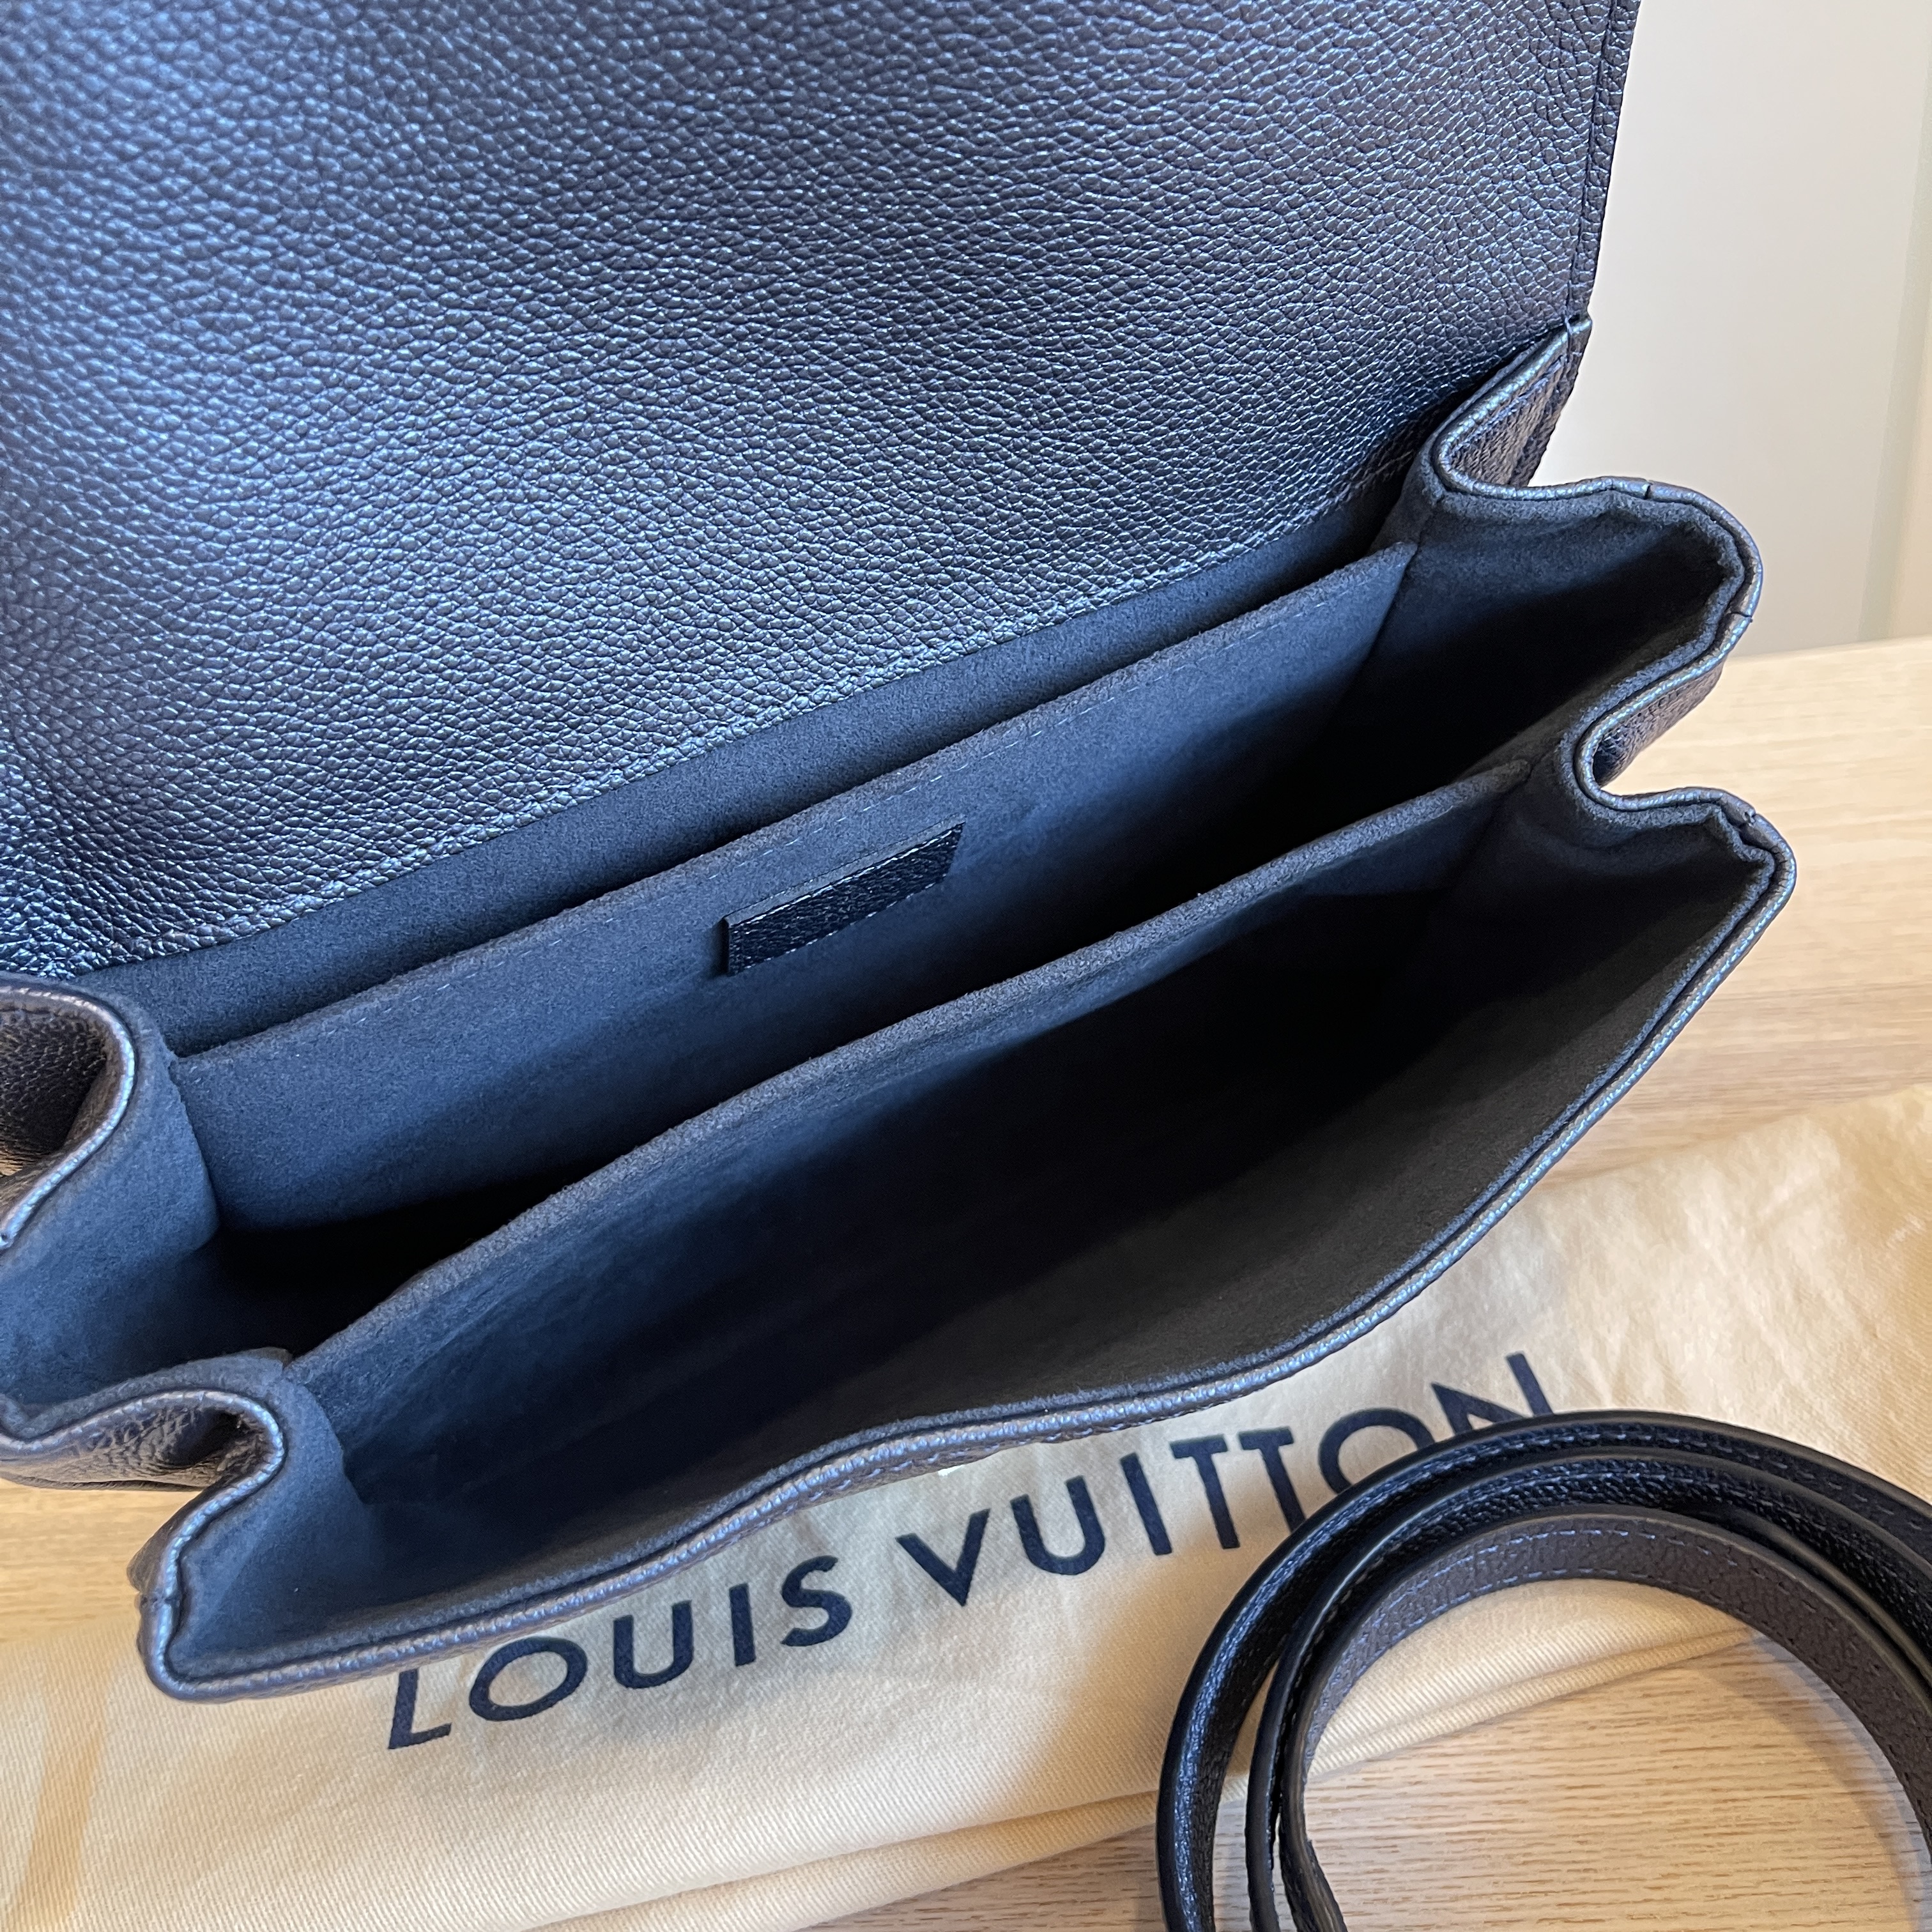 Louis Vuitton Pochette Métis Nacre Navy Blue Giant Monogram 